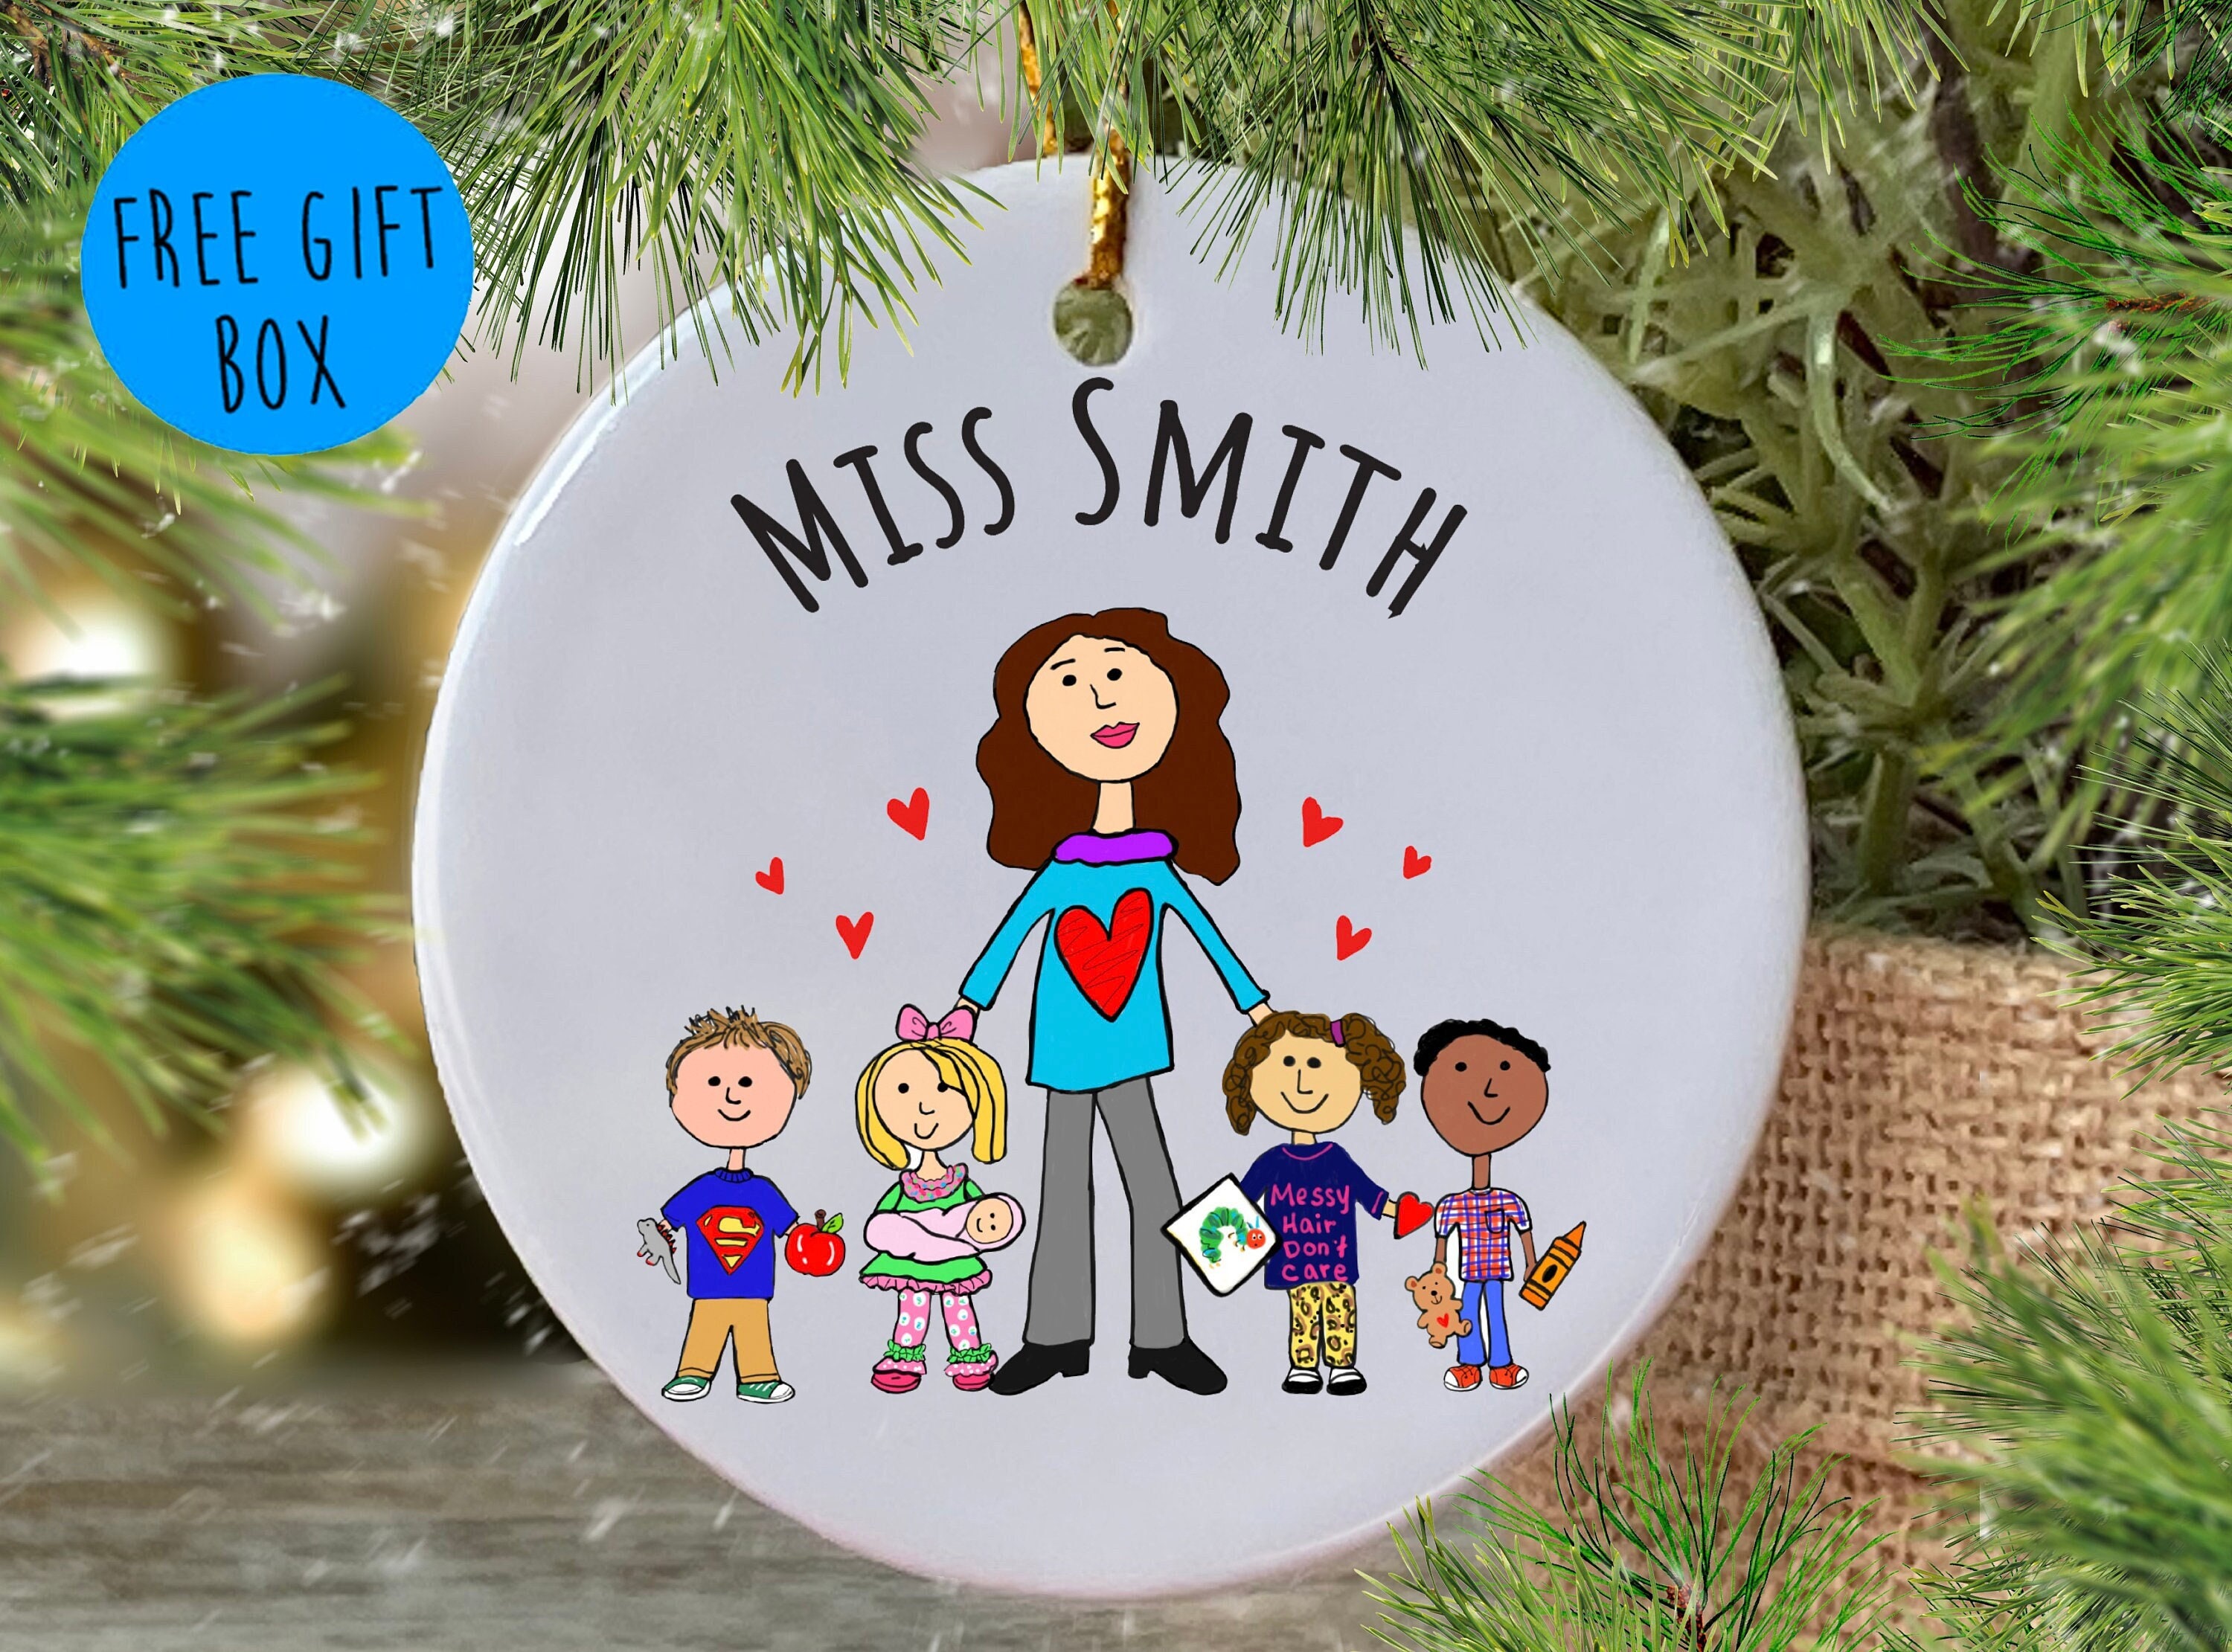 This year's Christmas gift for Preschool teachers - The Mombot